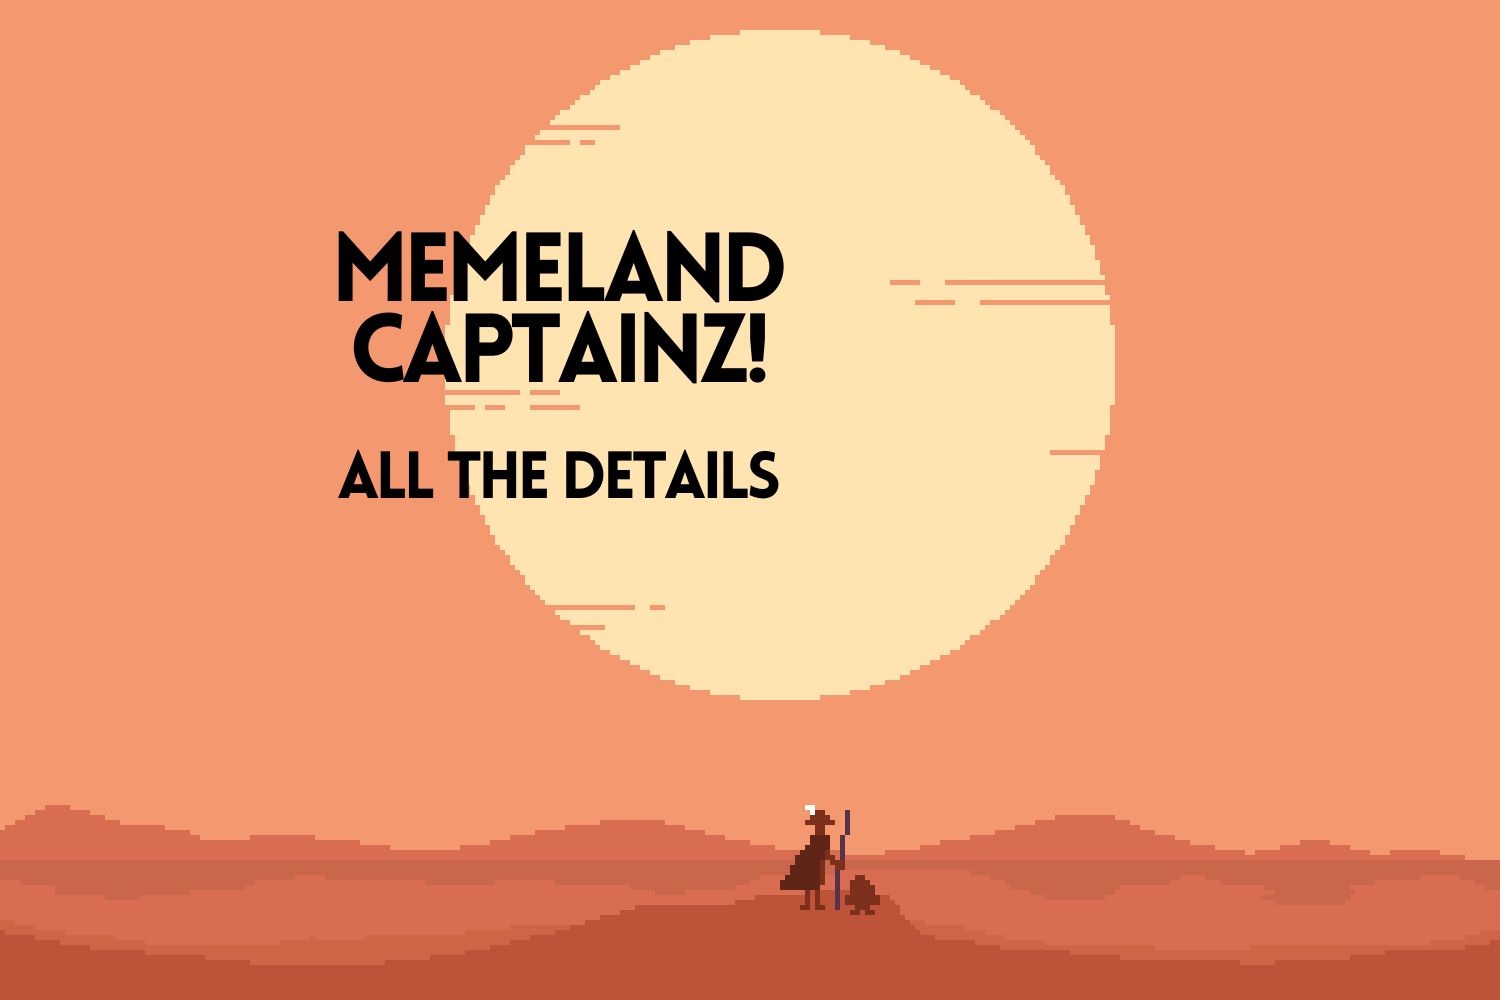 Memeland Captainz